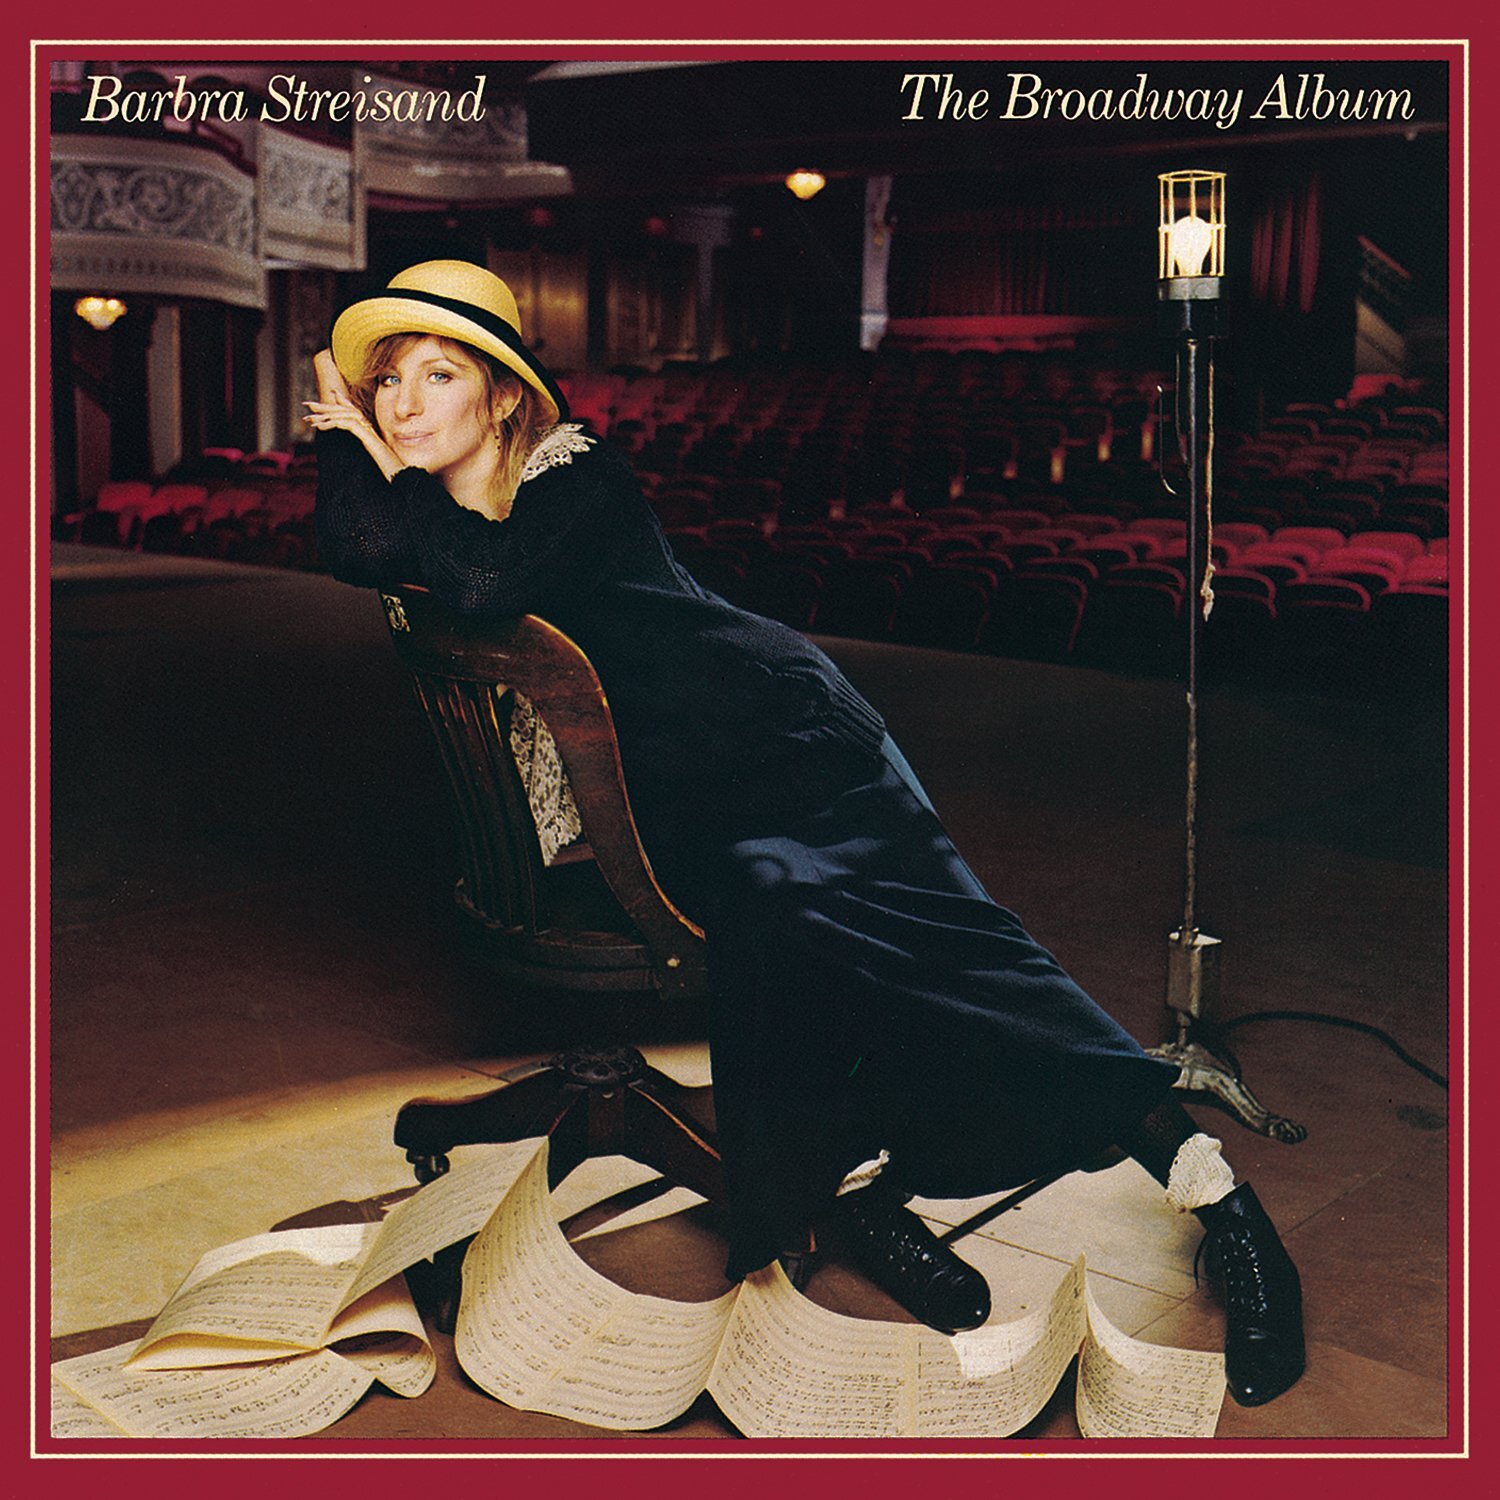 (56) The Broadway Album - Barbra Streisand.jpg